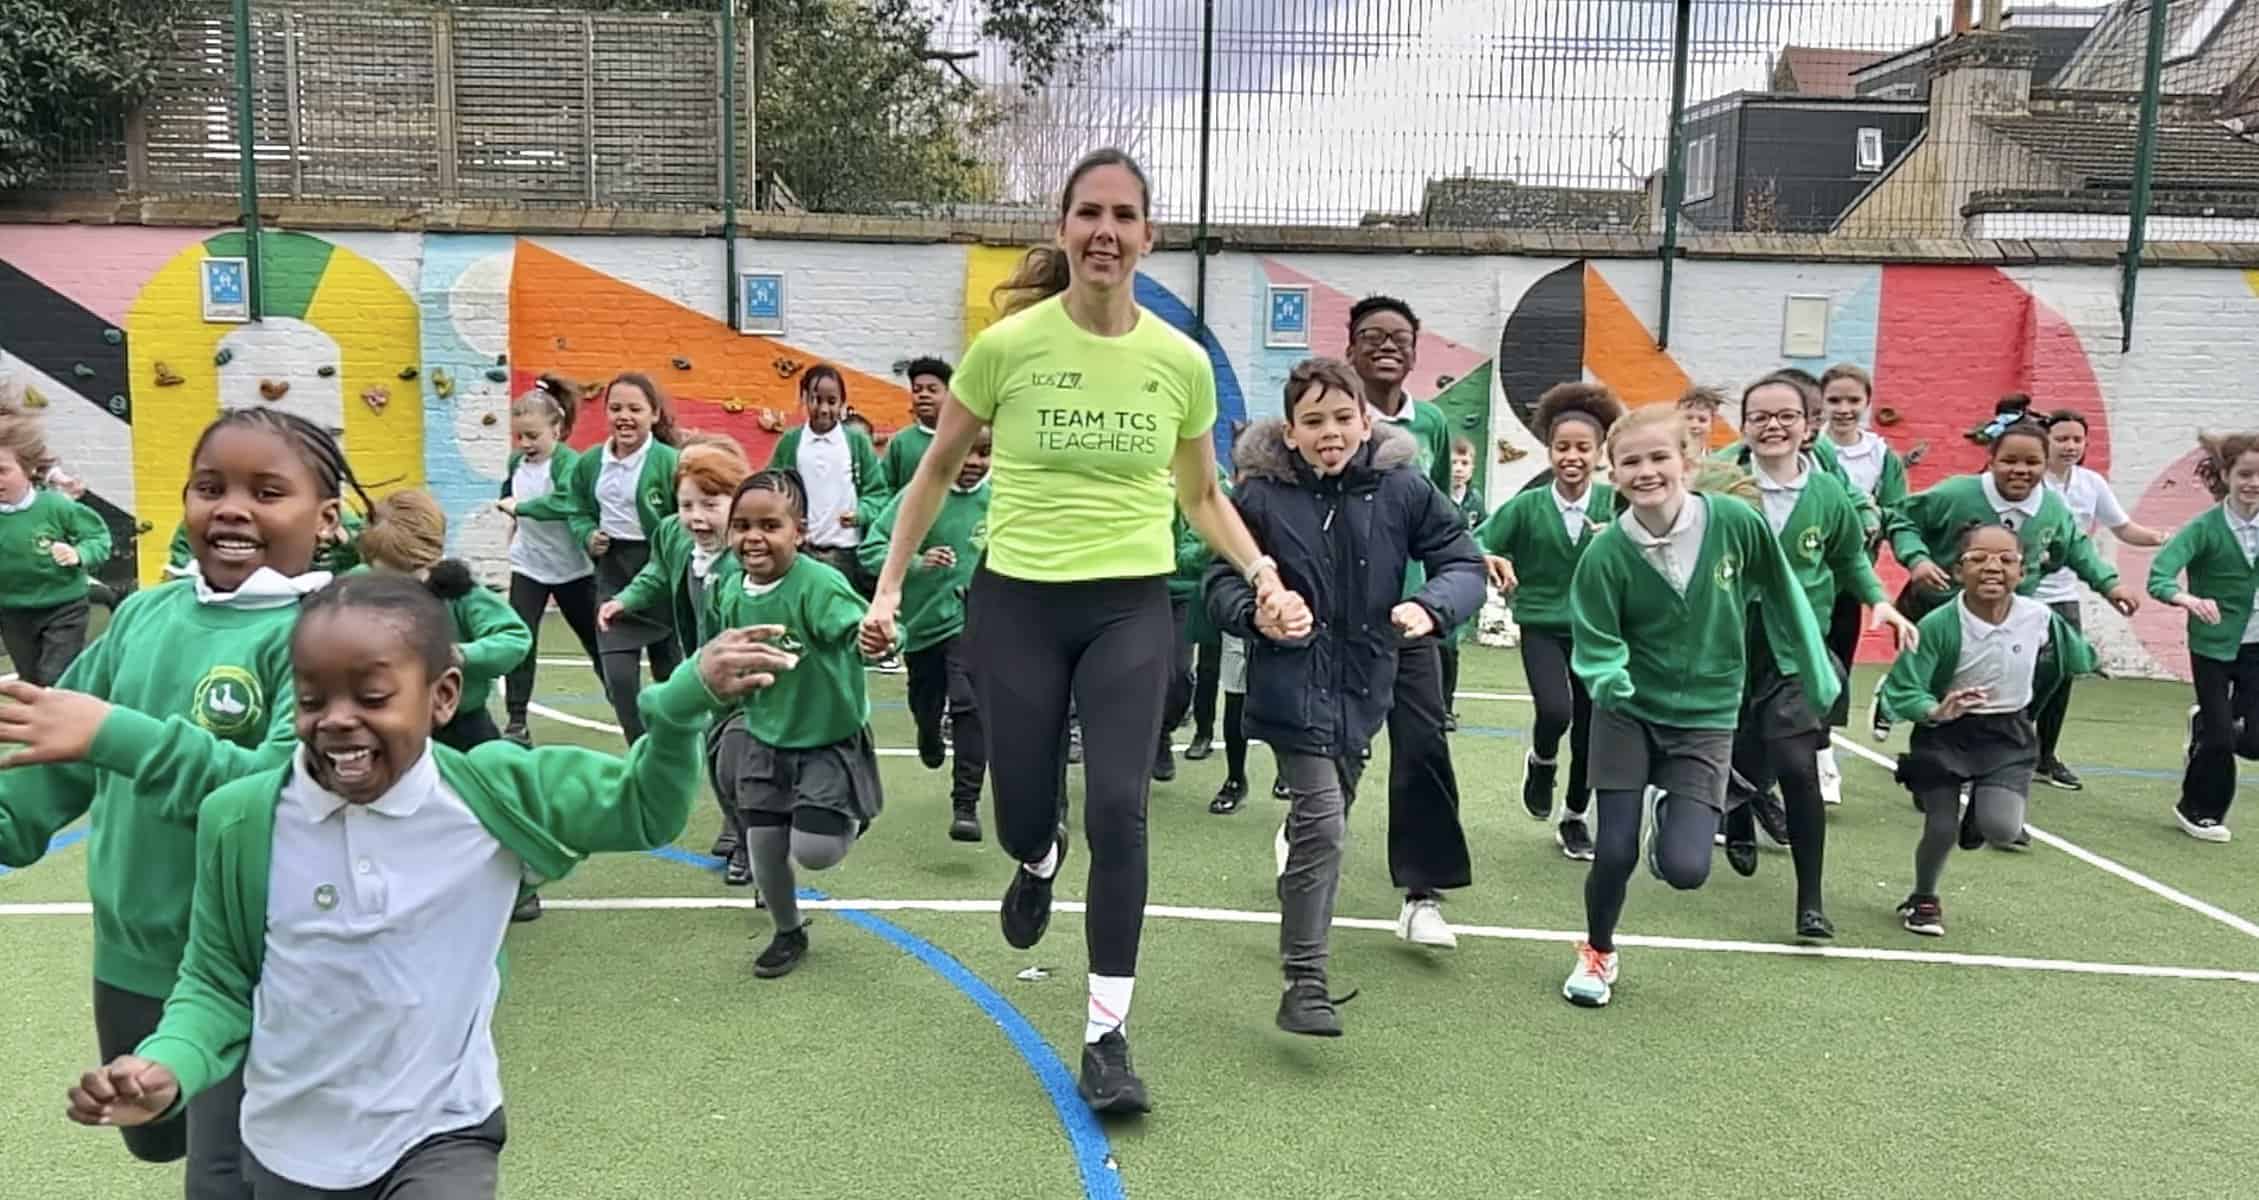 Dulwich teacher is running the London Marathon for her old school